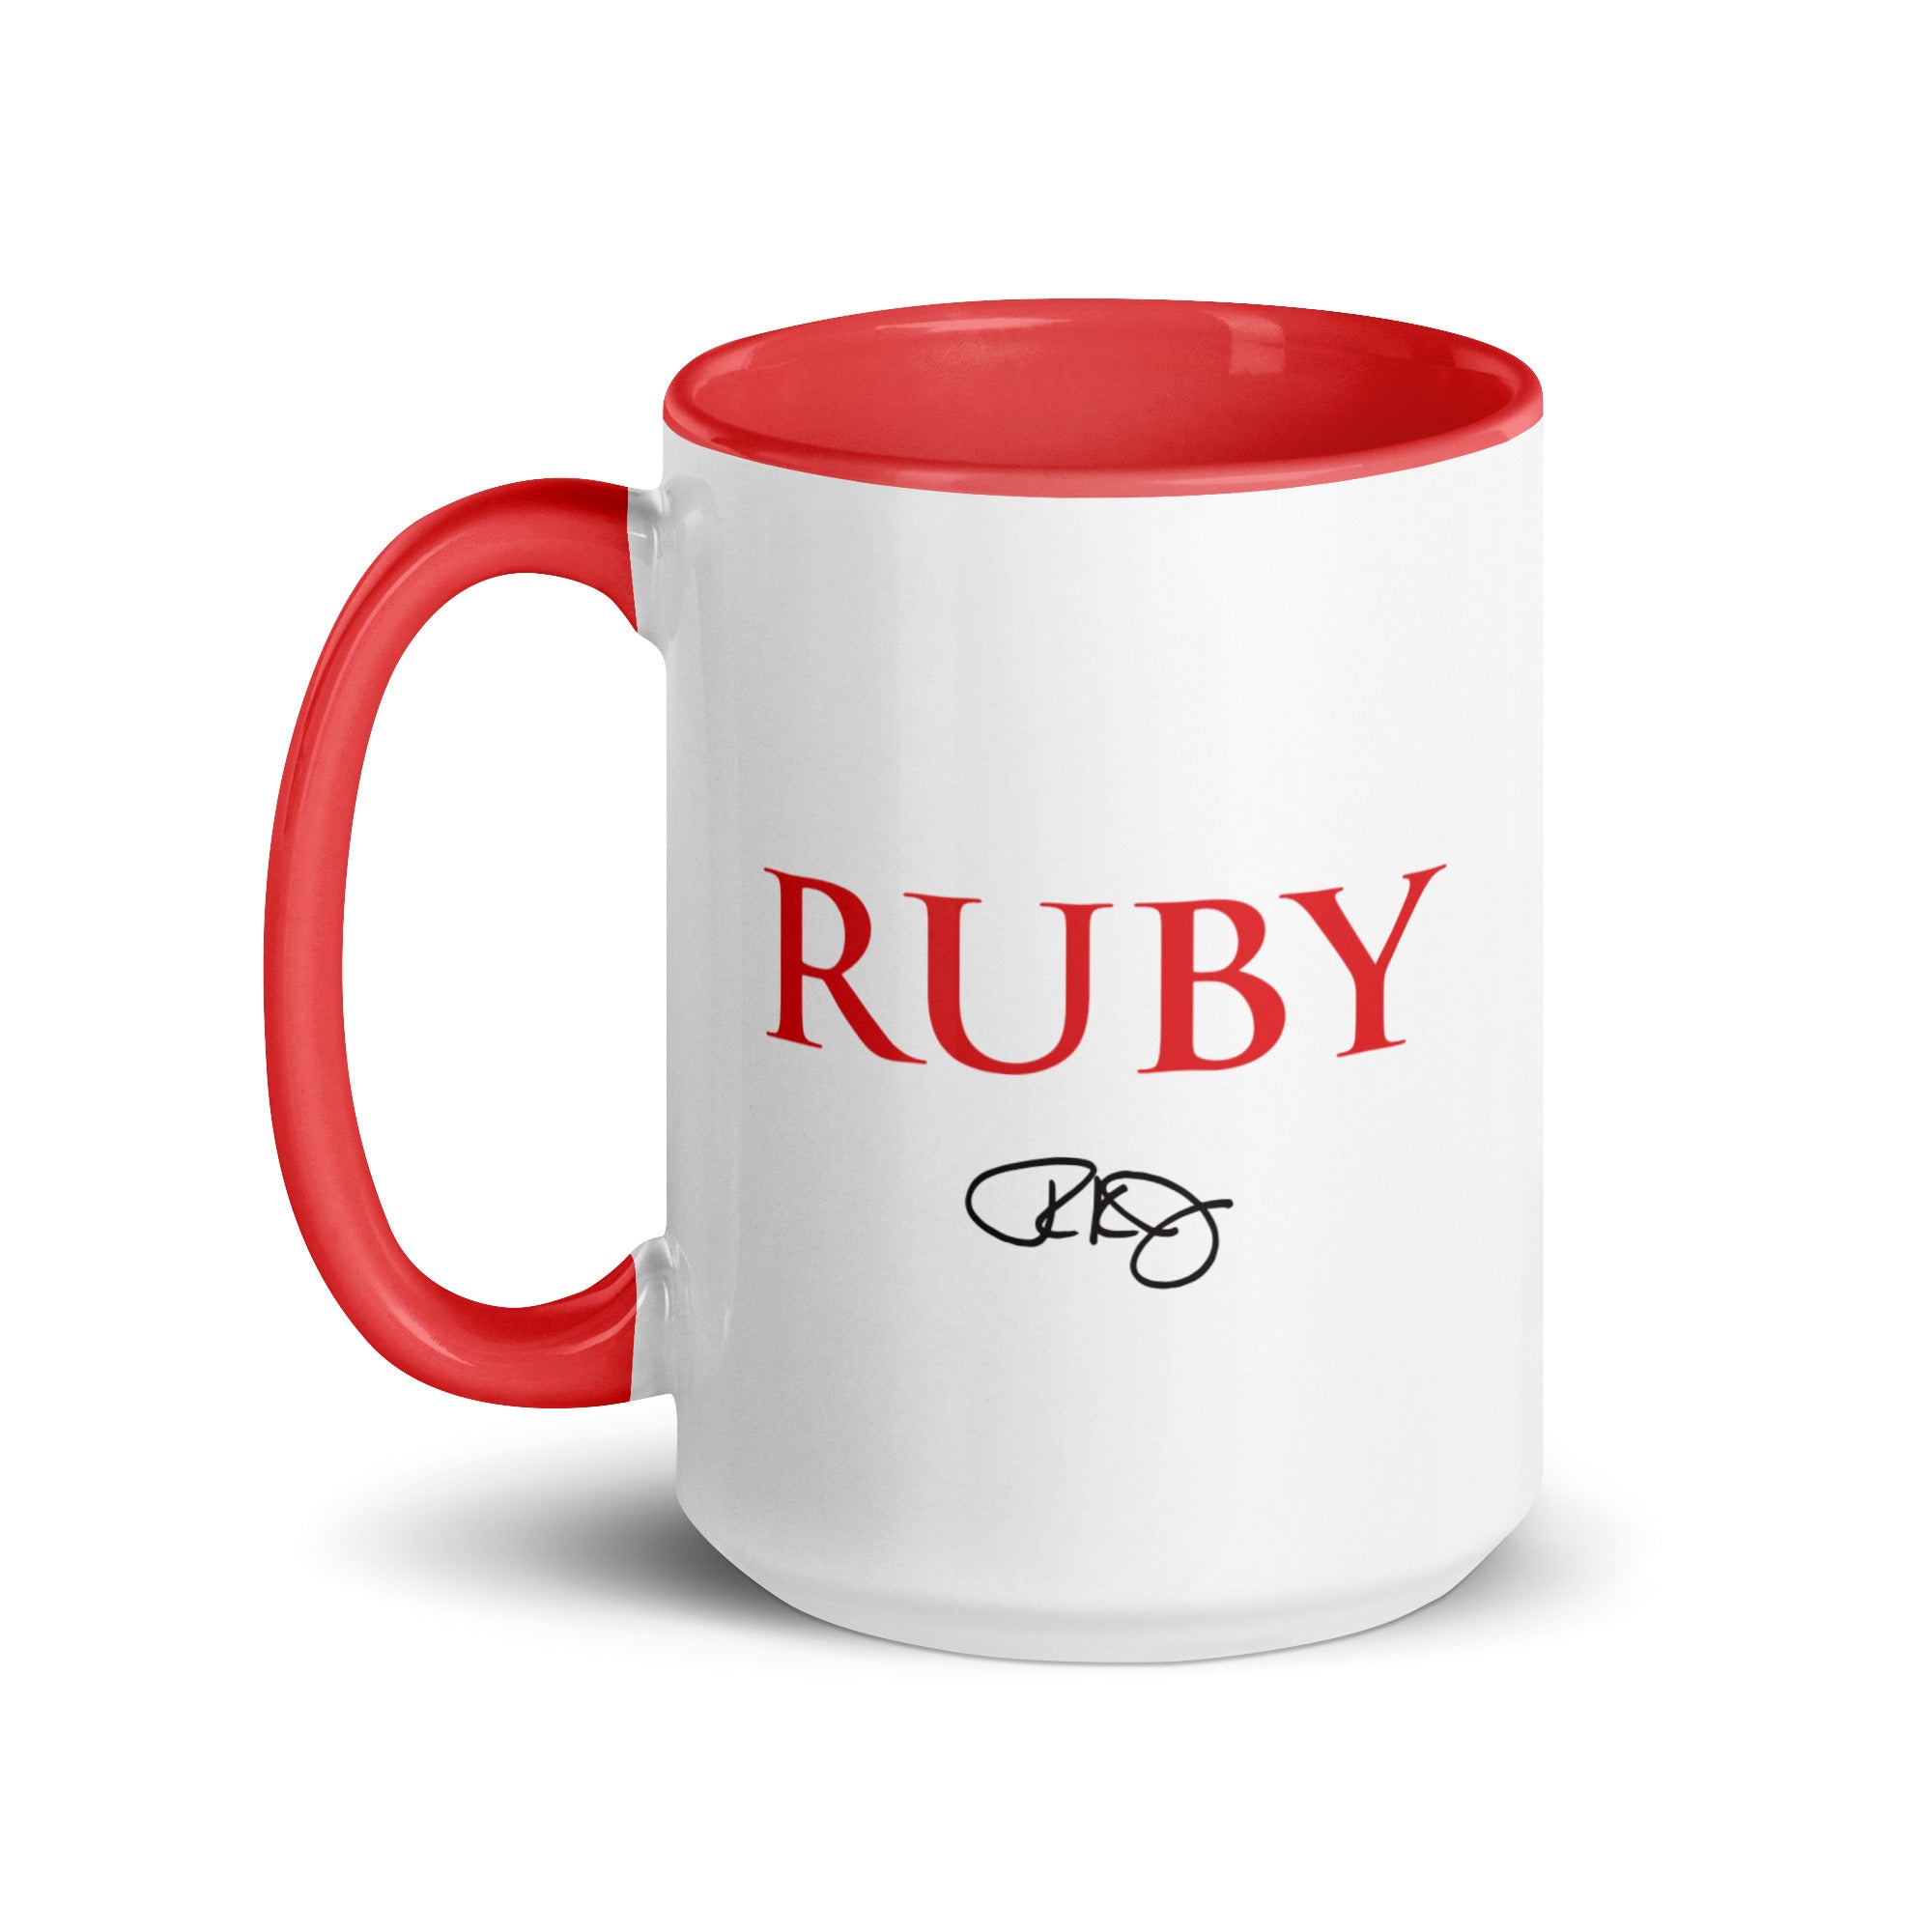 Ruby Magic Comes From the Heart 15 oz Mug